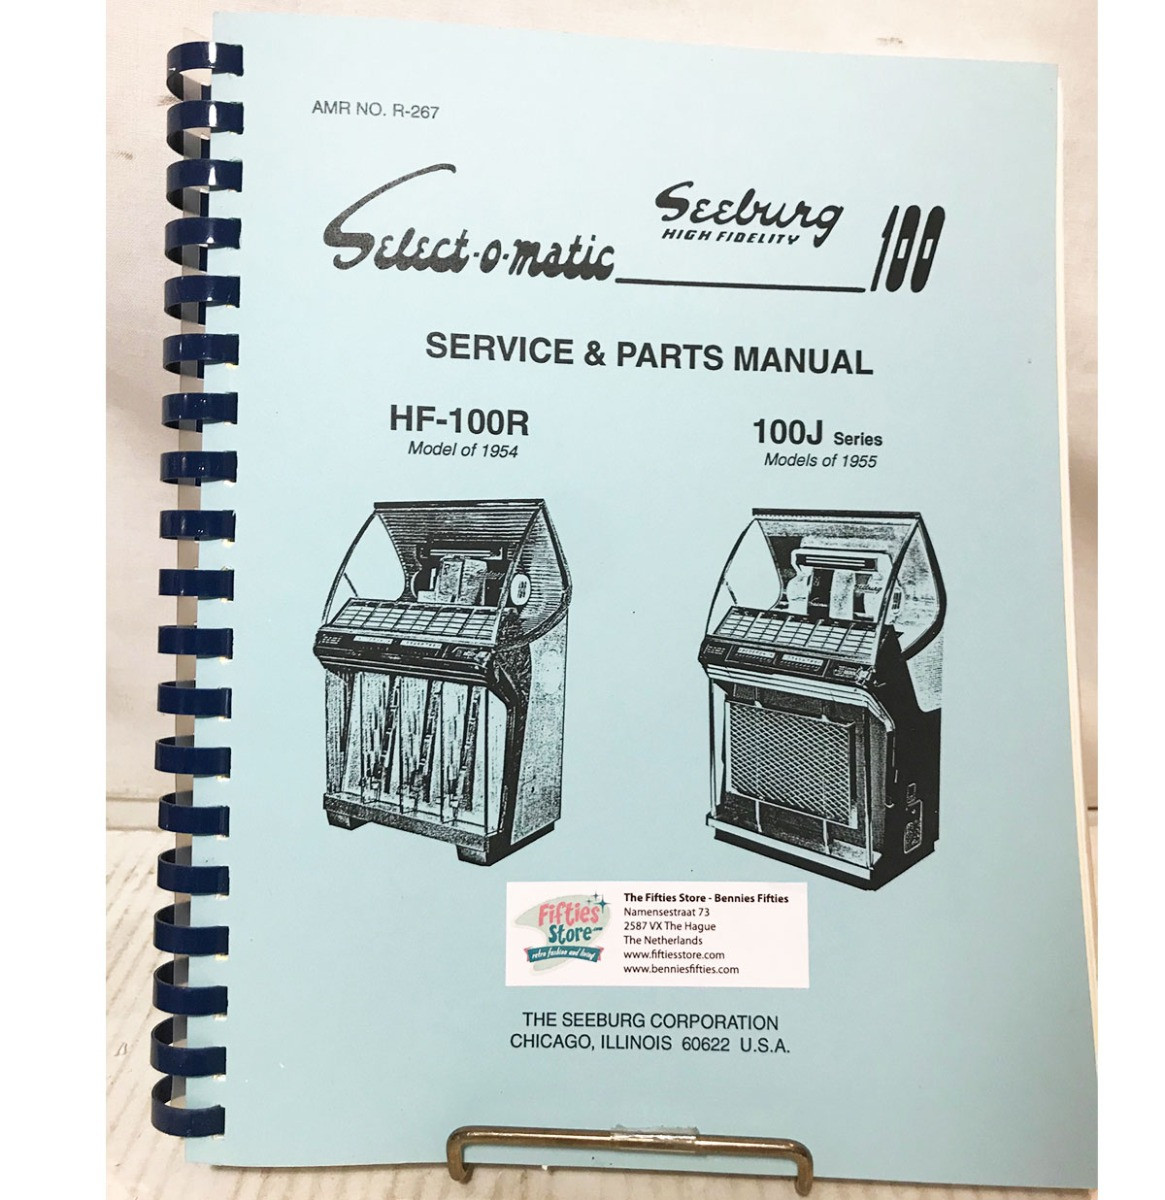 Service & Parts Manual Seeburg Jukebox Model HF-100R & 100J